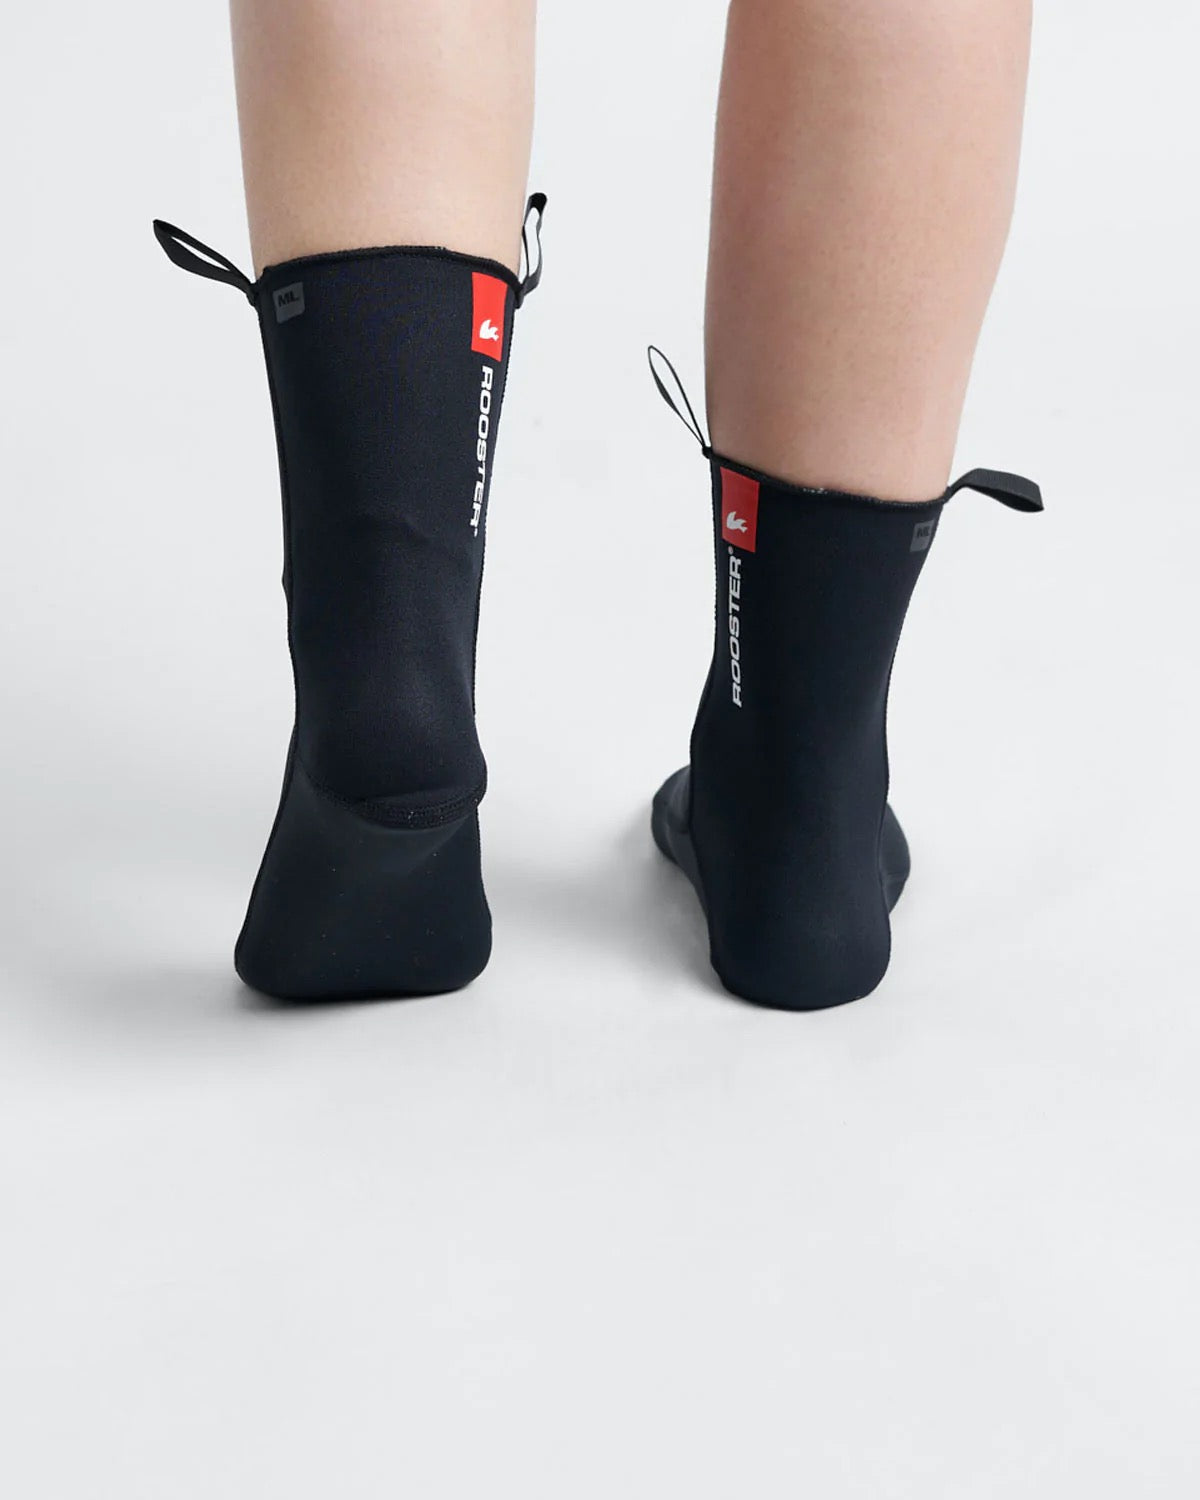 Hot Socks - 0.5mm